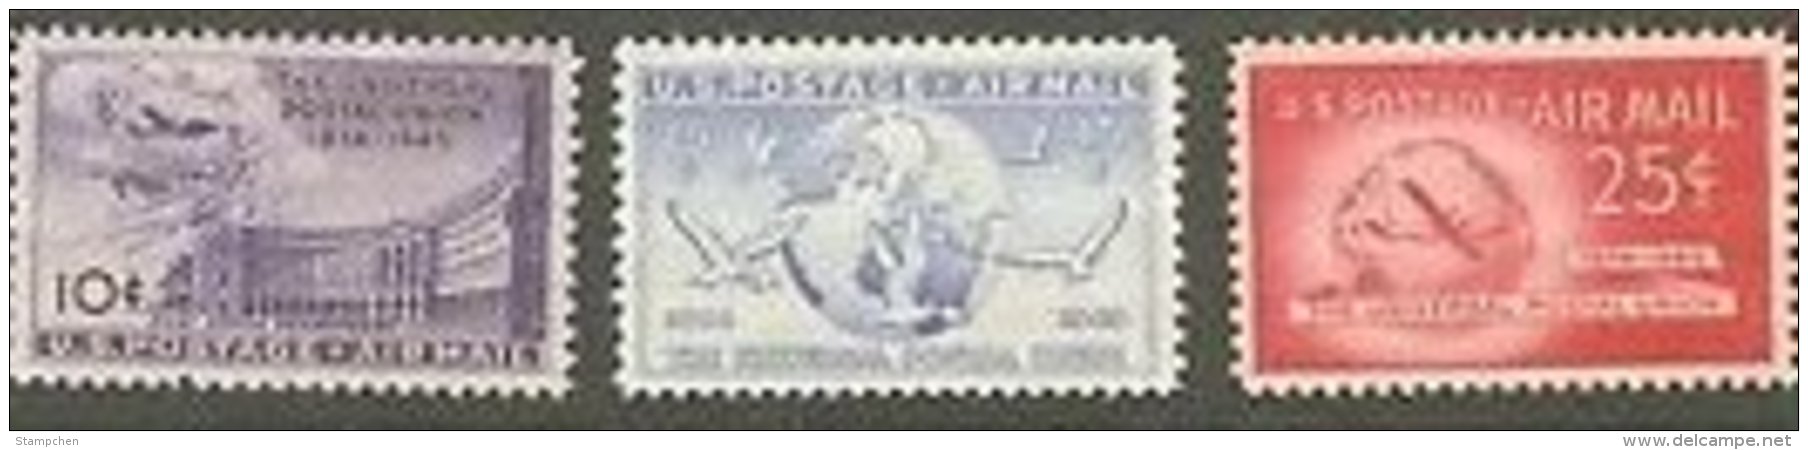 USA 1949  Air Mail Stamps-Universal Postal Union Sc#c42-c44 UPU Post Airplane Plane Dove Bird Globe - UPU (Union Postale Universelle)